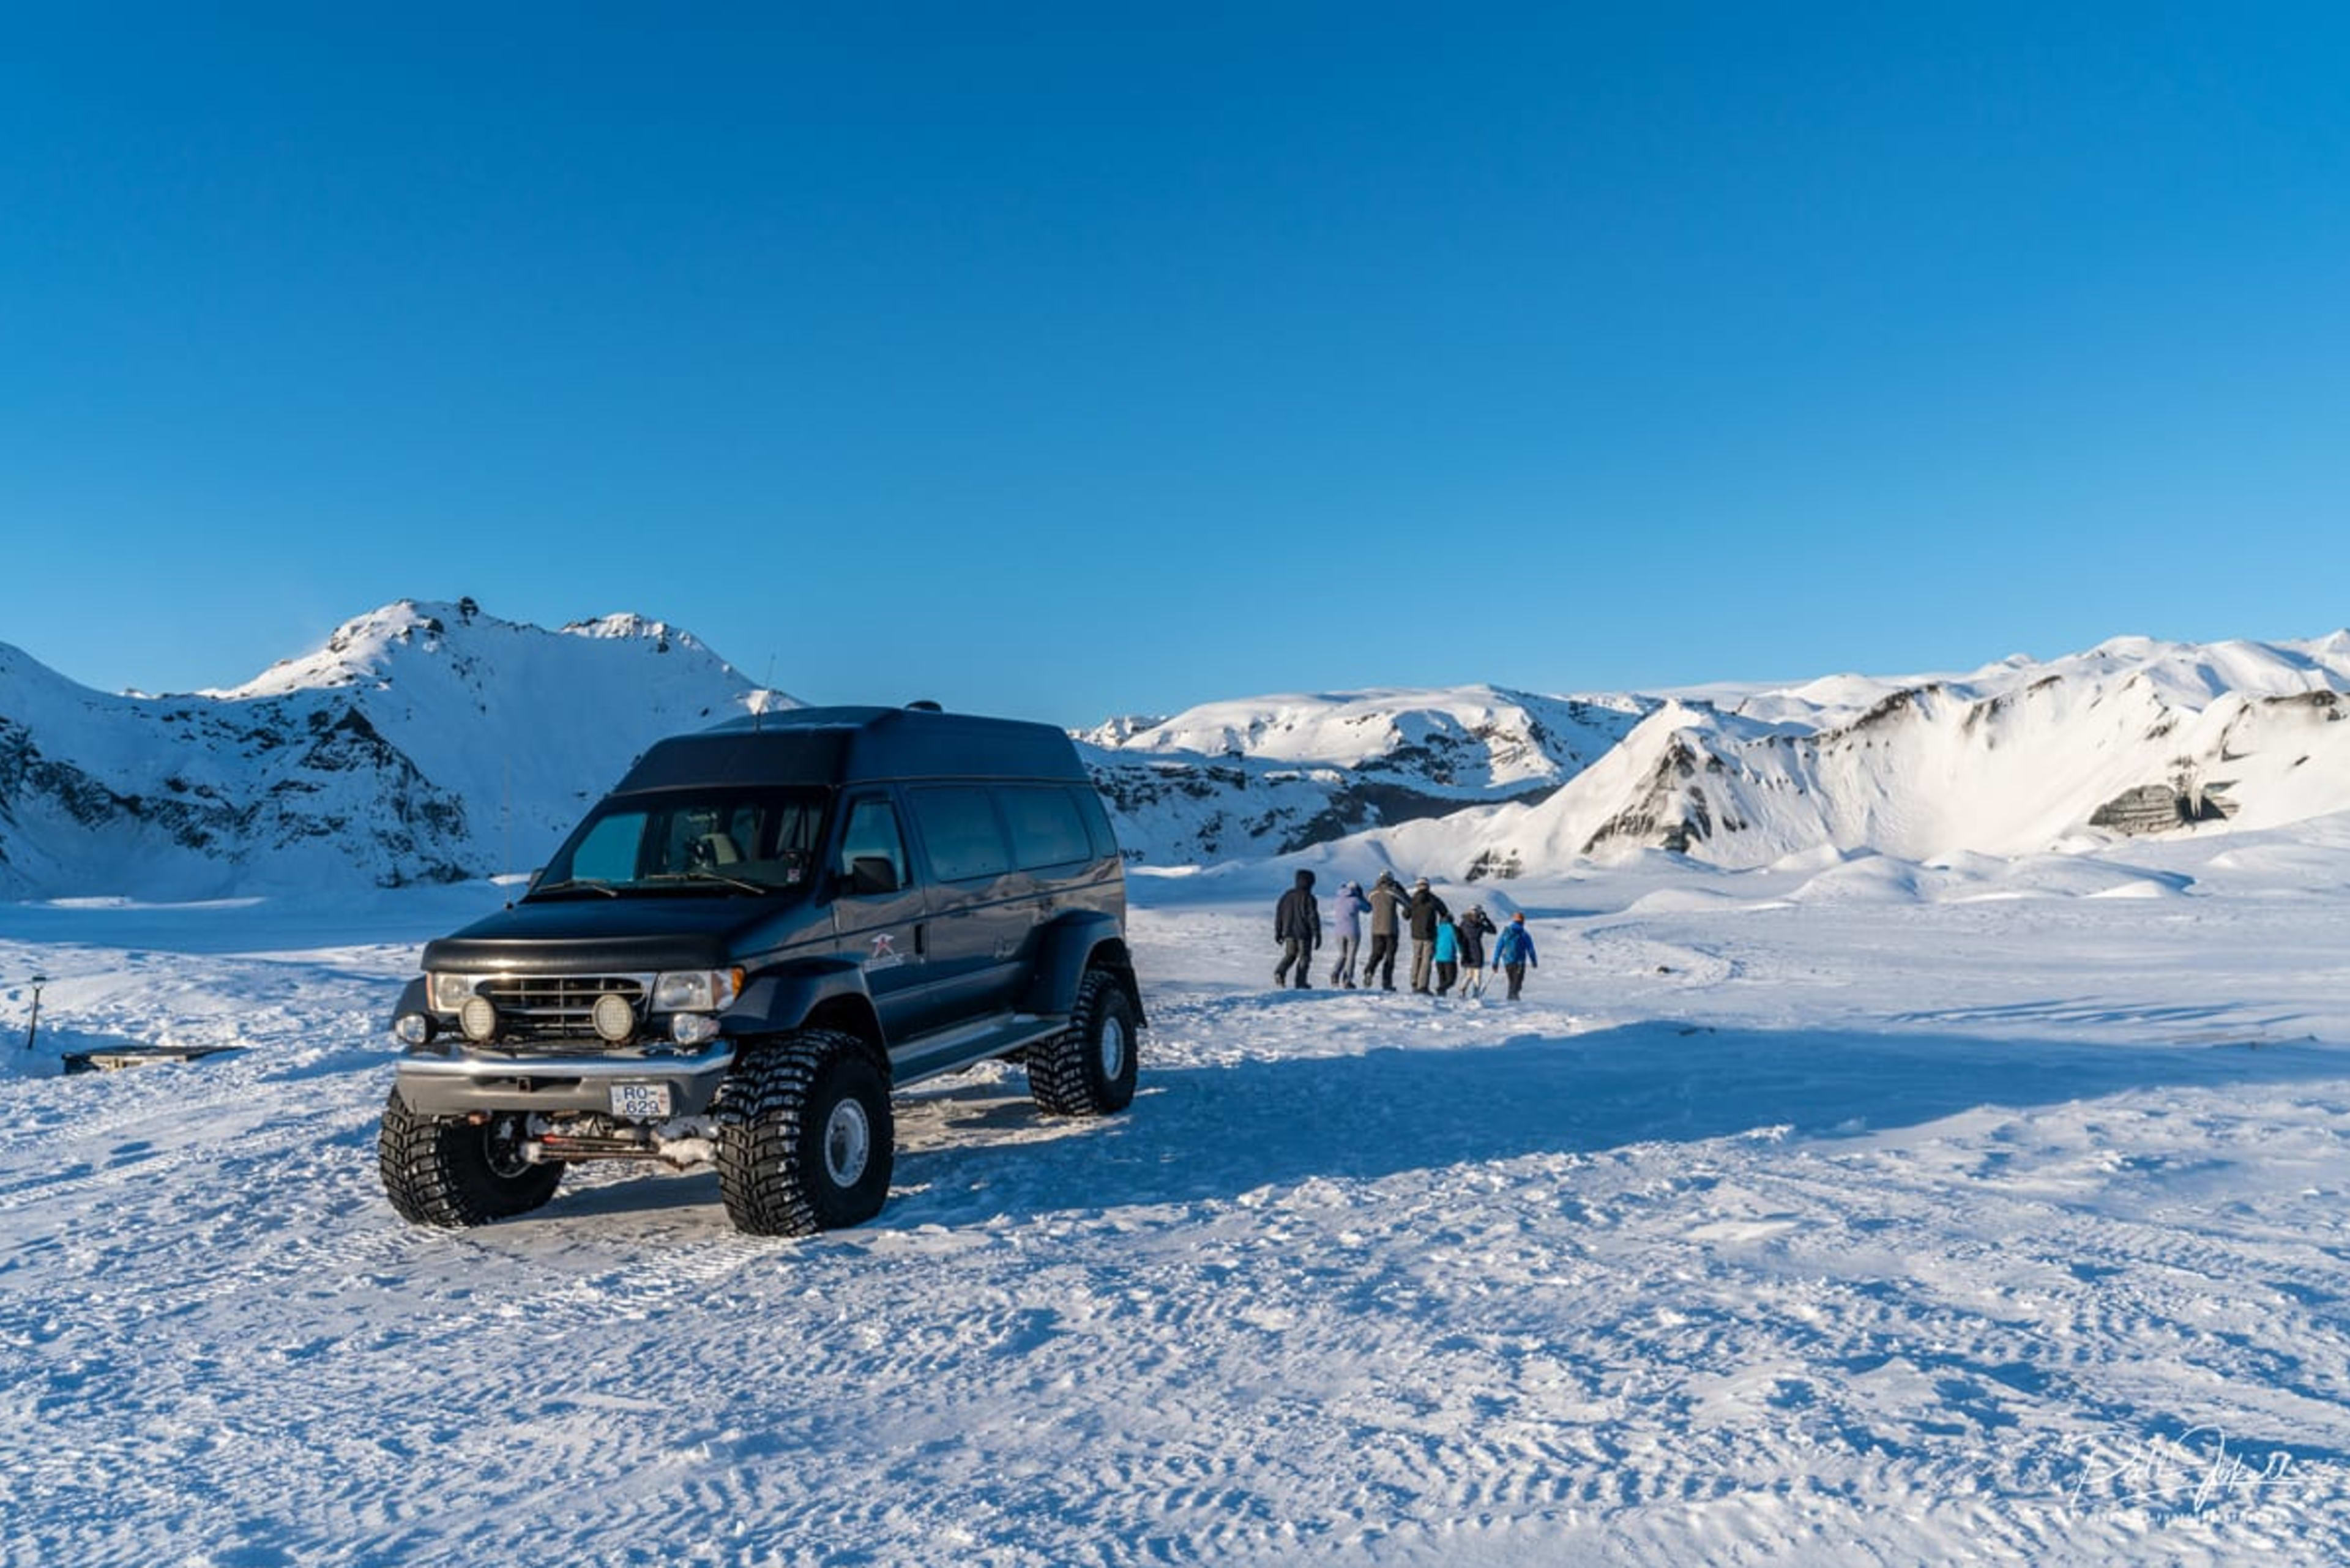 katla ice cave tour with super jeep transfer